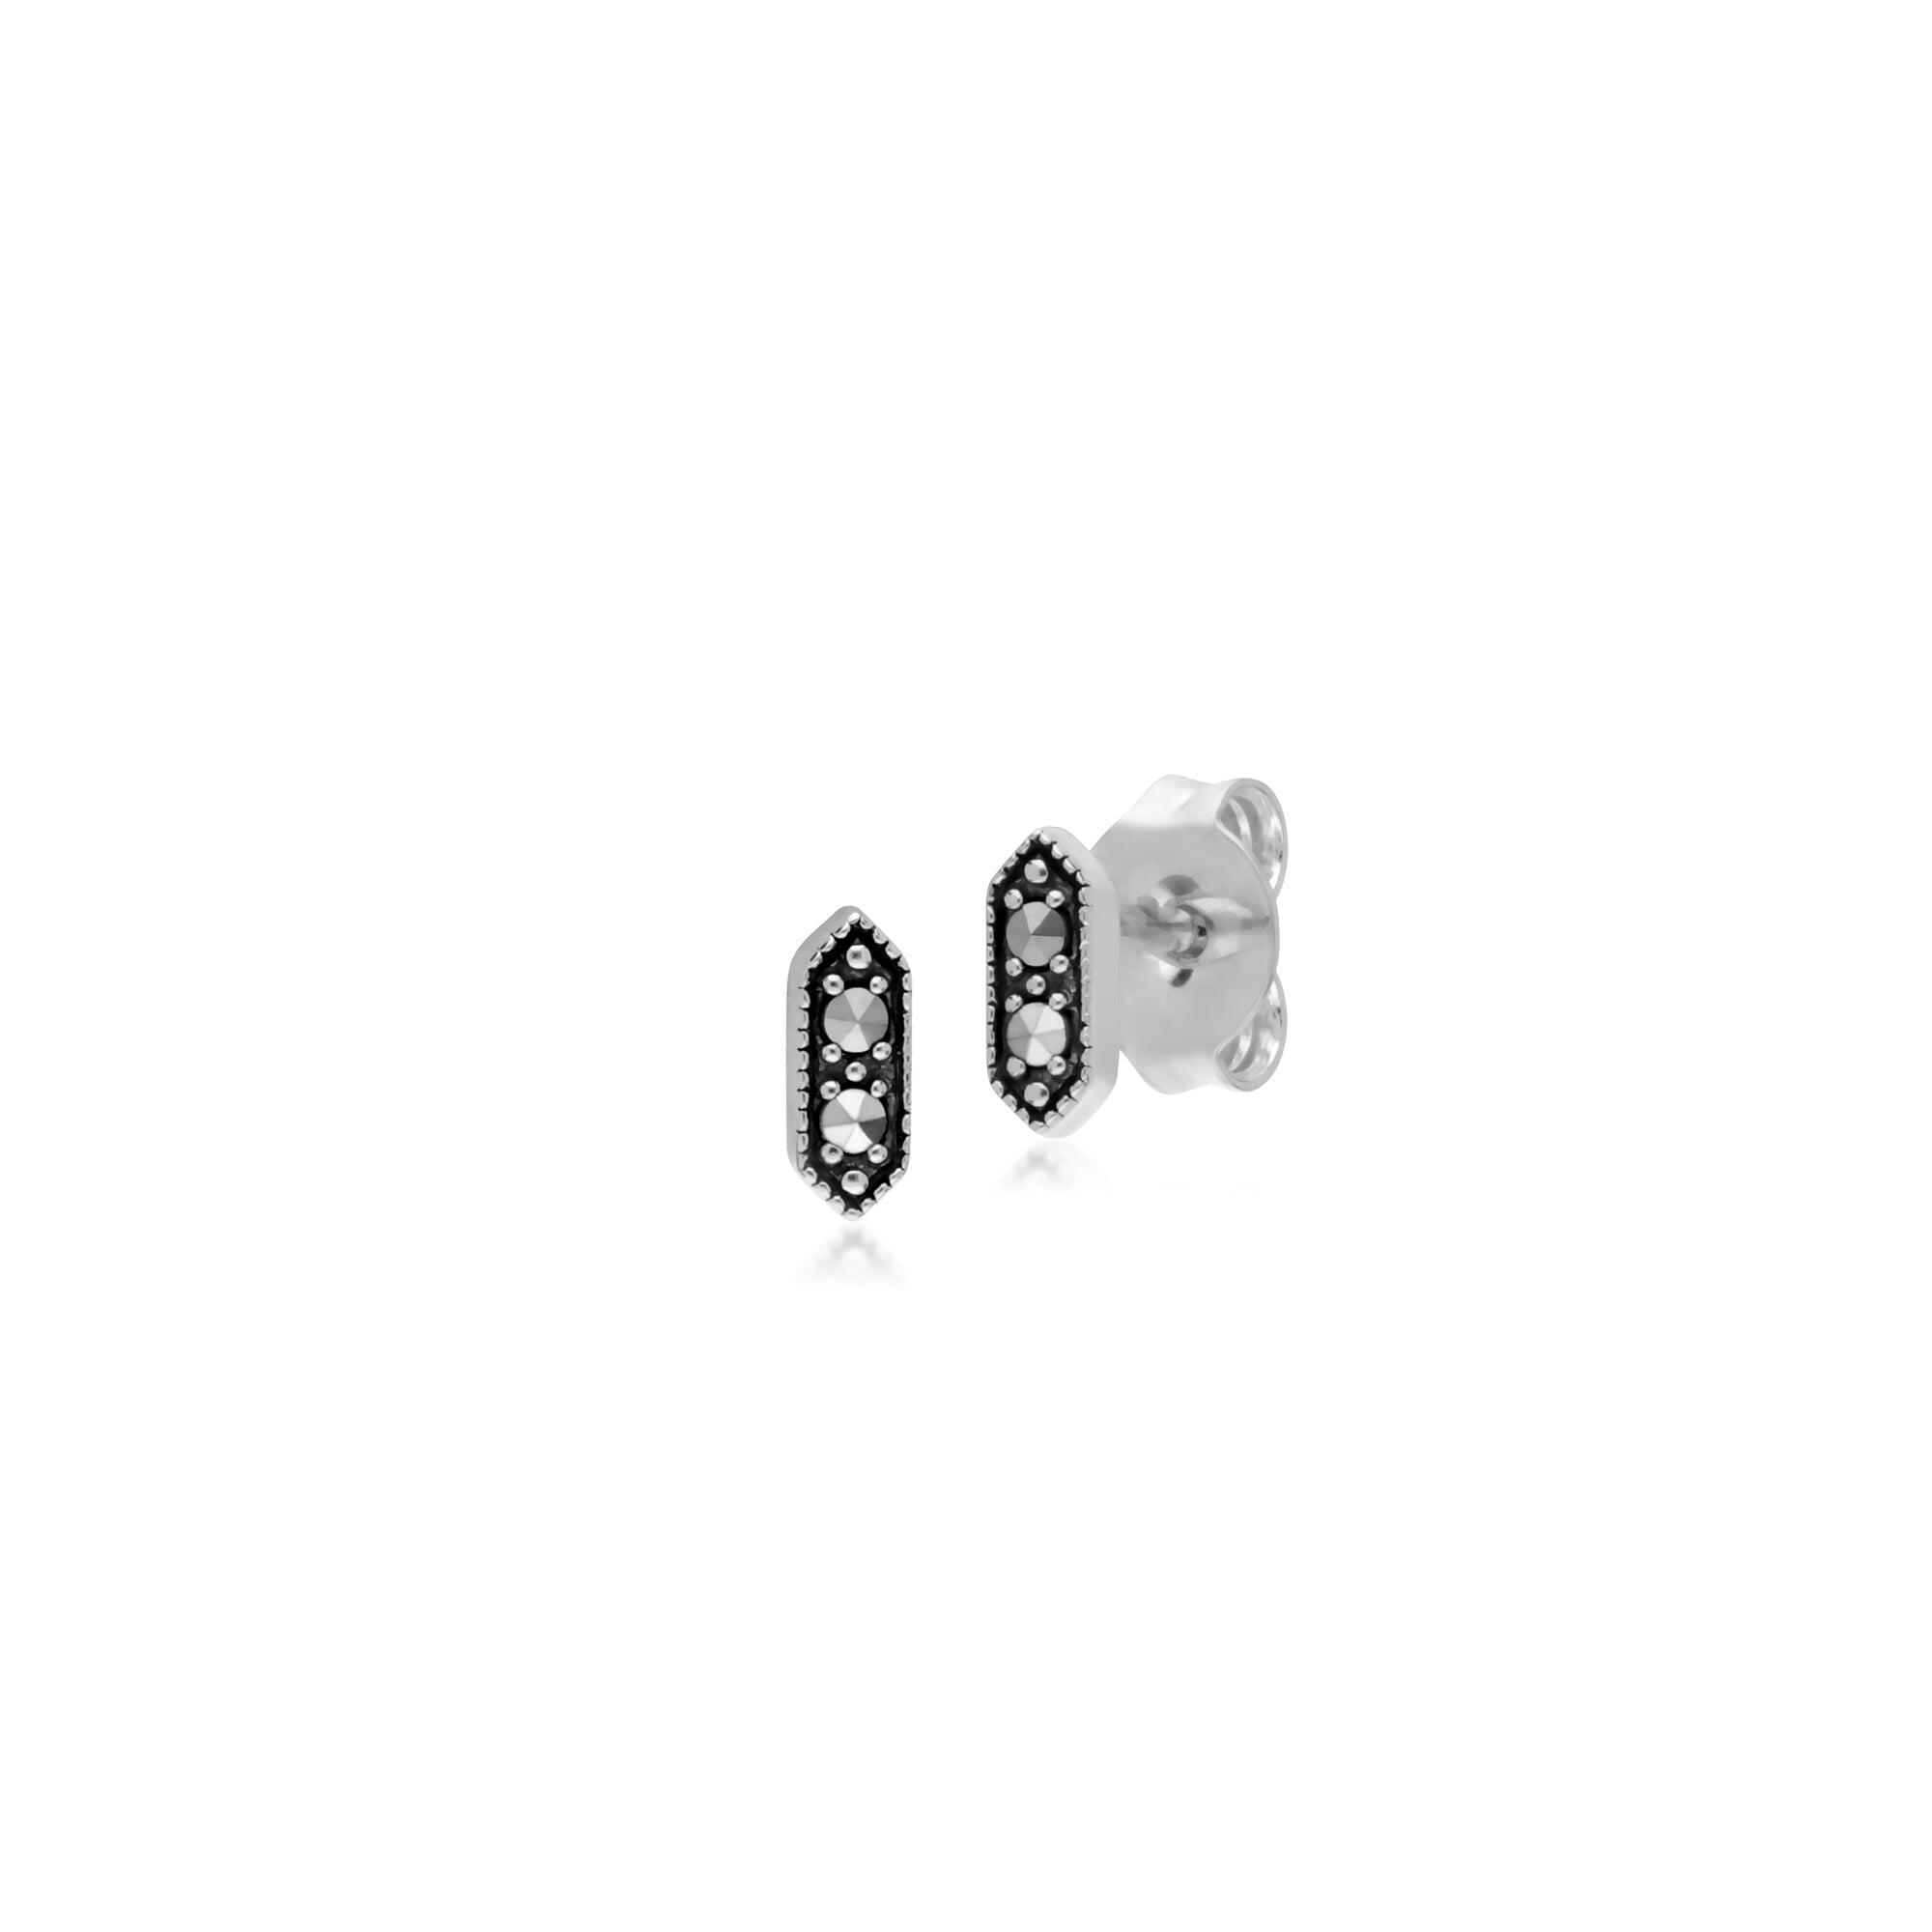 Geometric Round Marcasite Hexagon Stud Earrings in 925 Sterling Silver